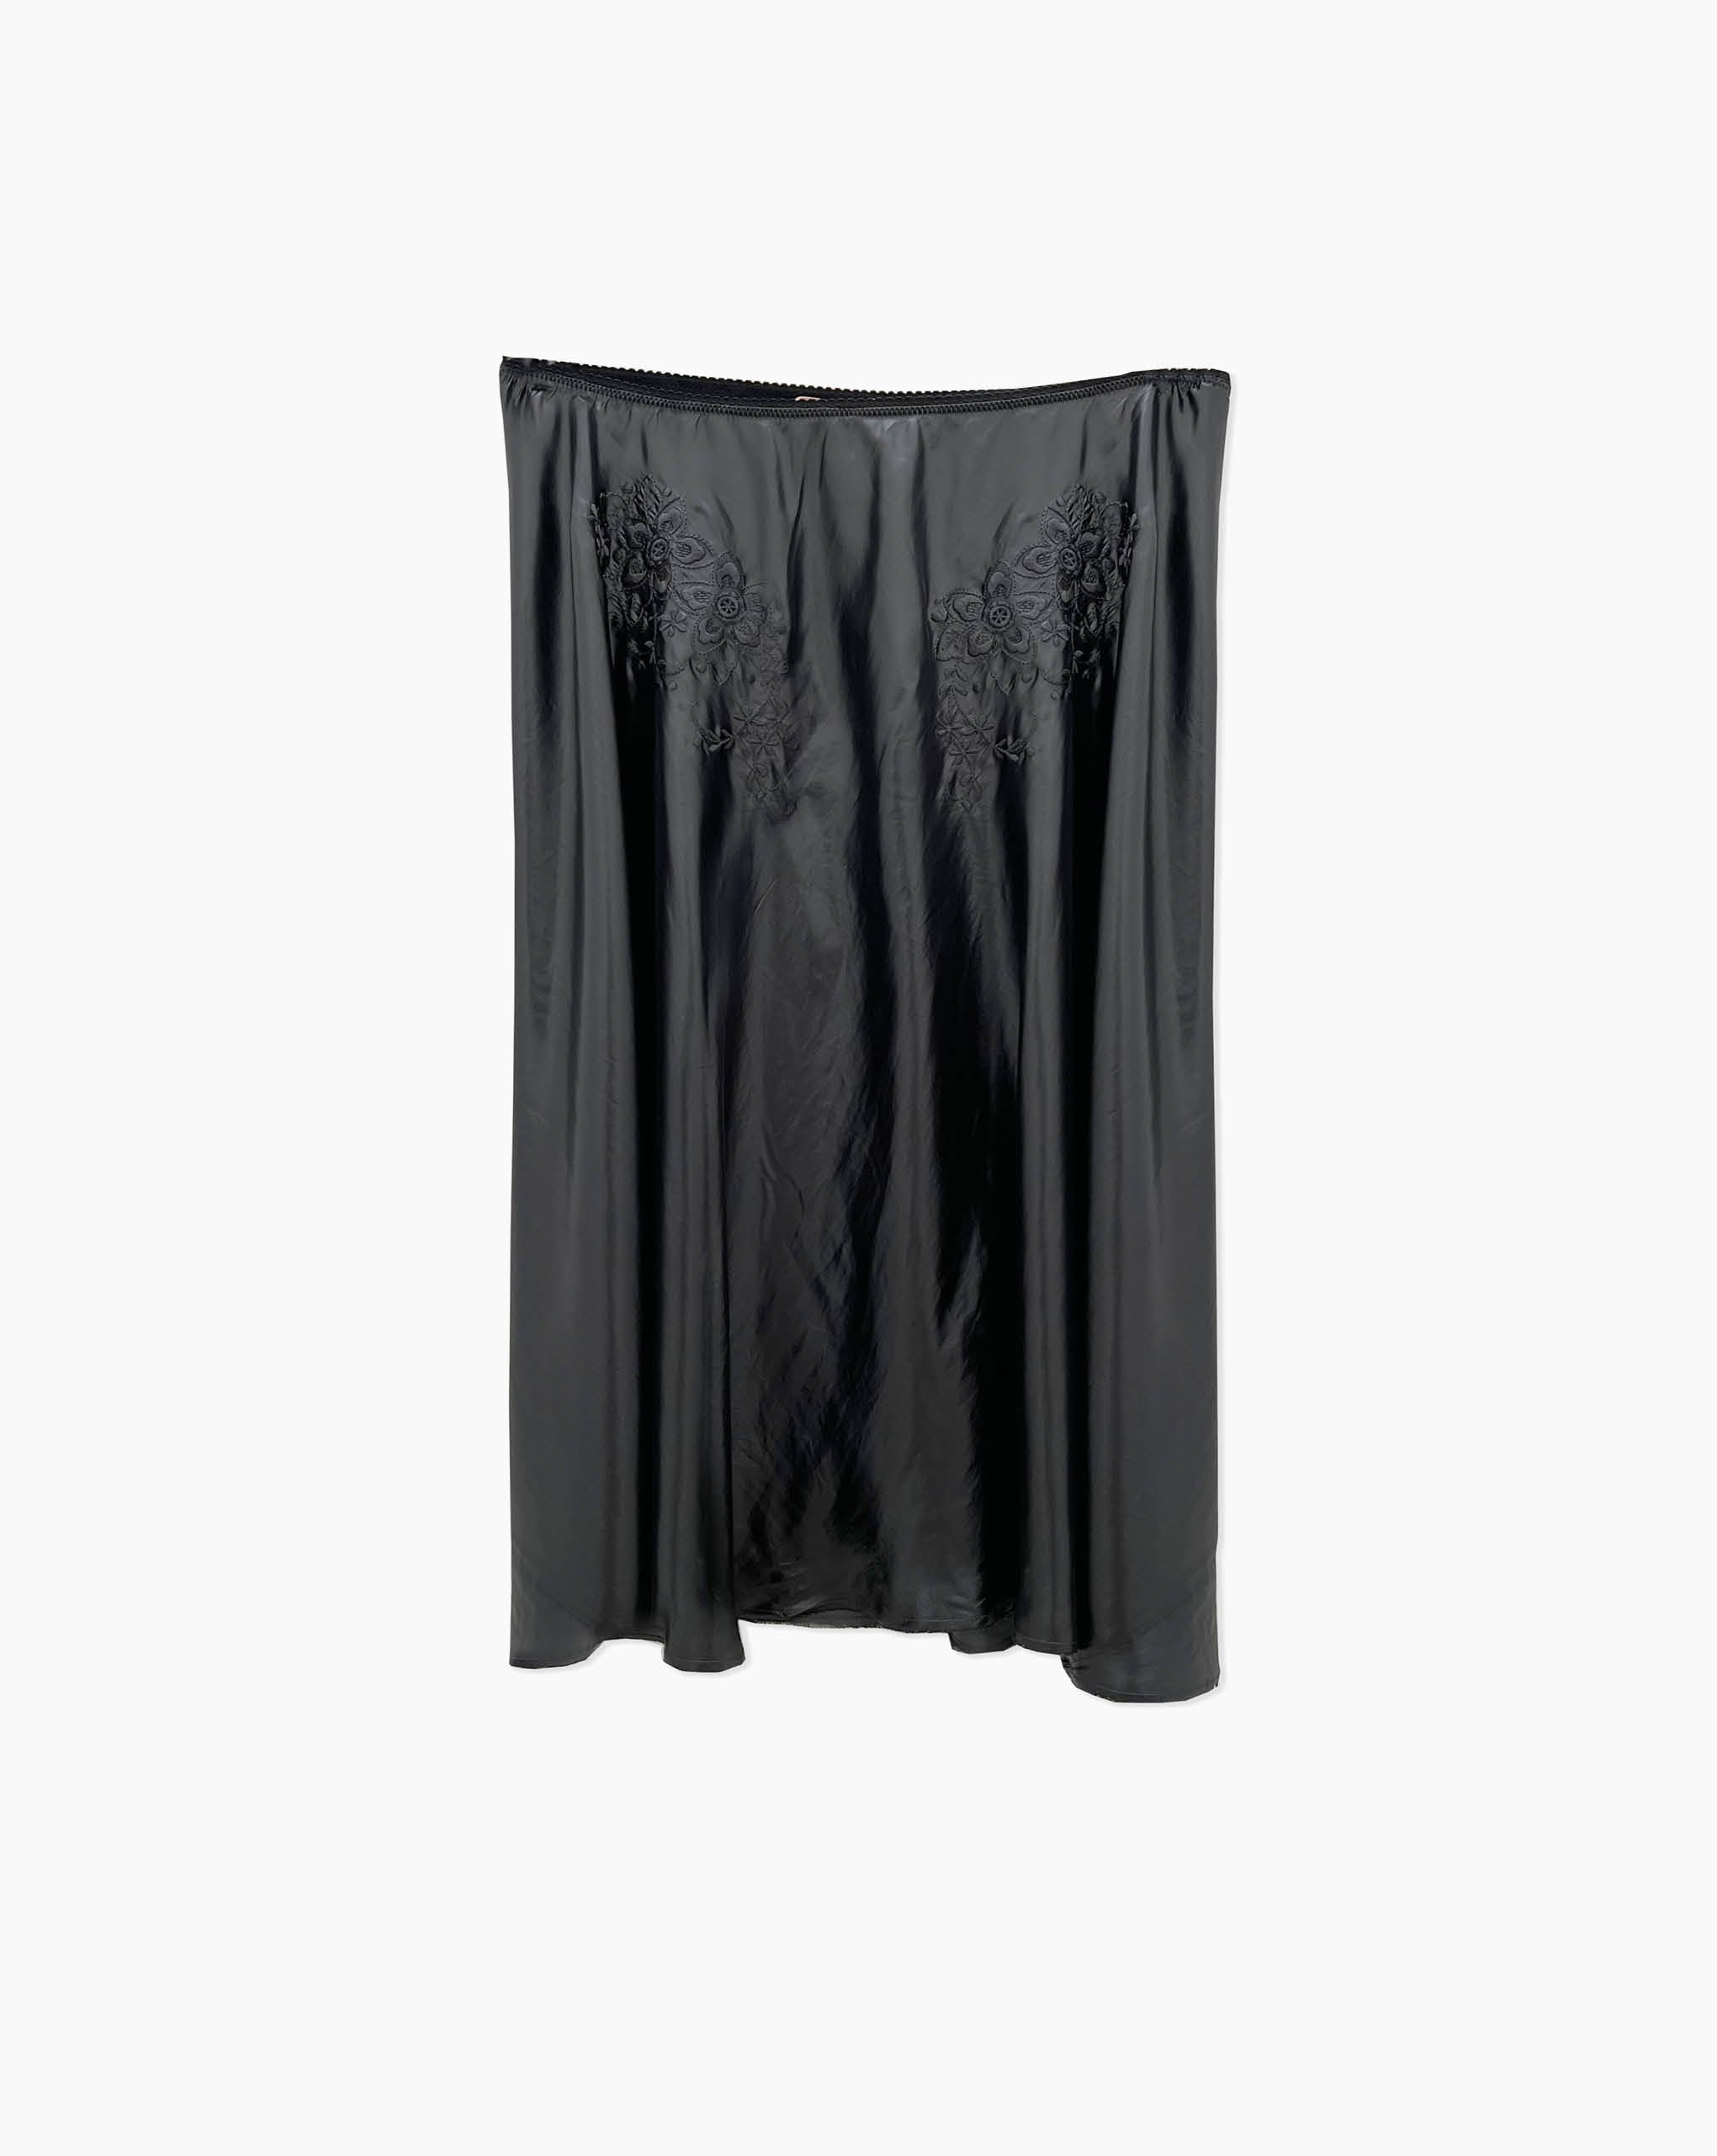 Laminated Floral Skirt Black